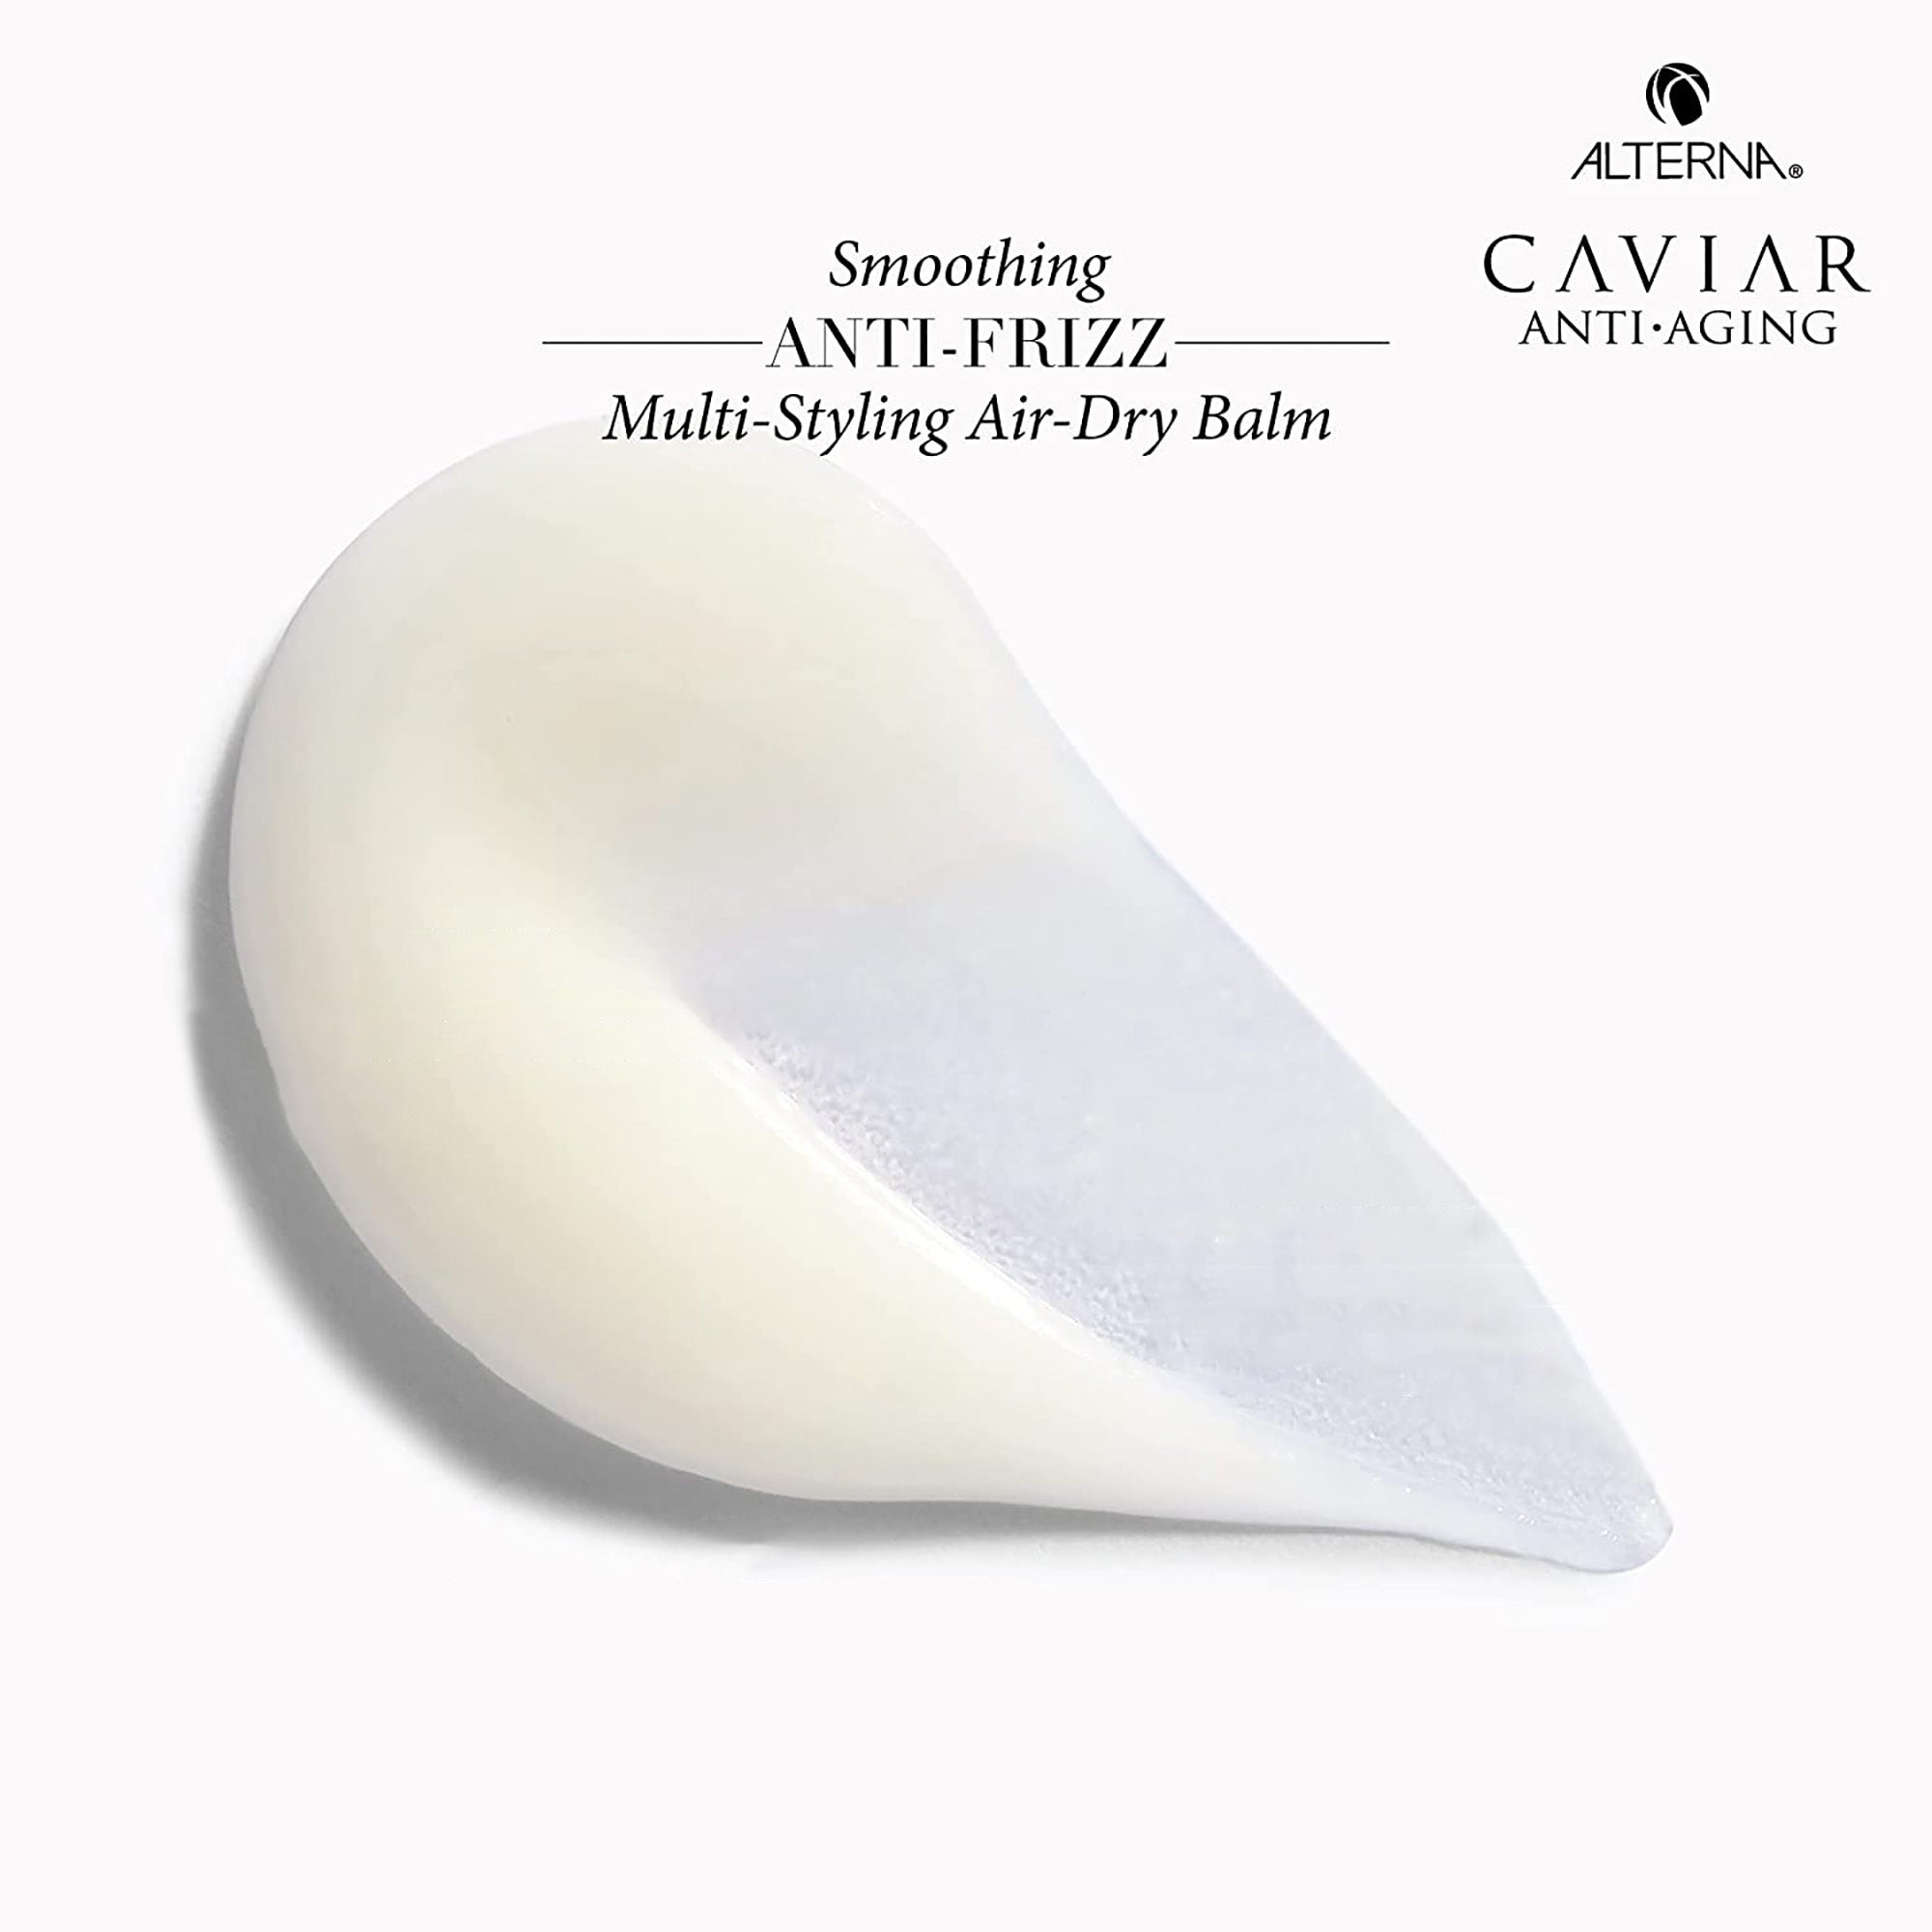 Alterna Caviar Anti-Aging Smoothing Anti-Frizz Multi-Styling Air Dry Balm / 3.4OZ